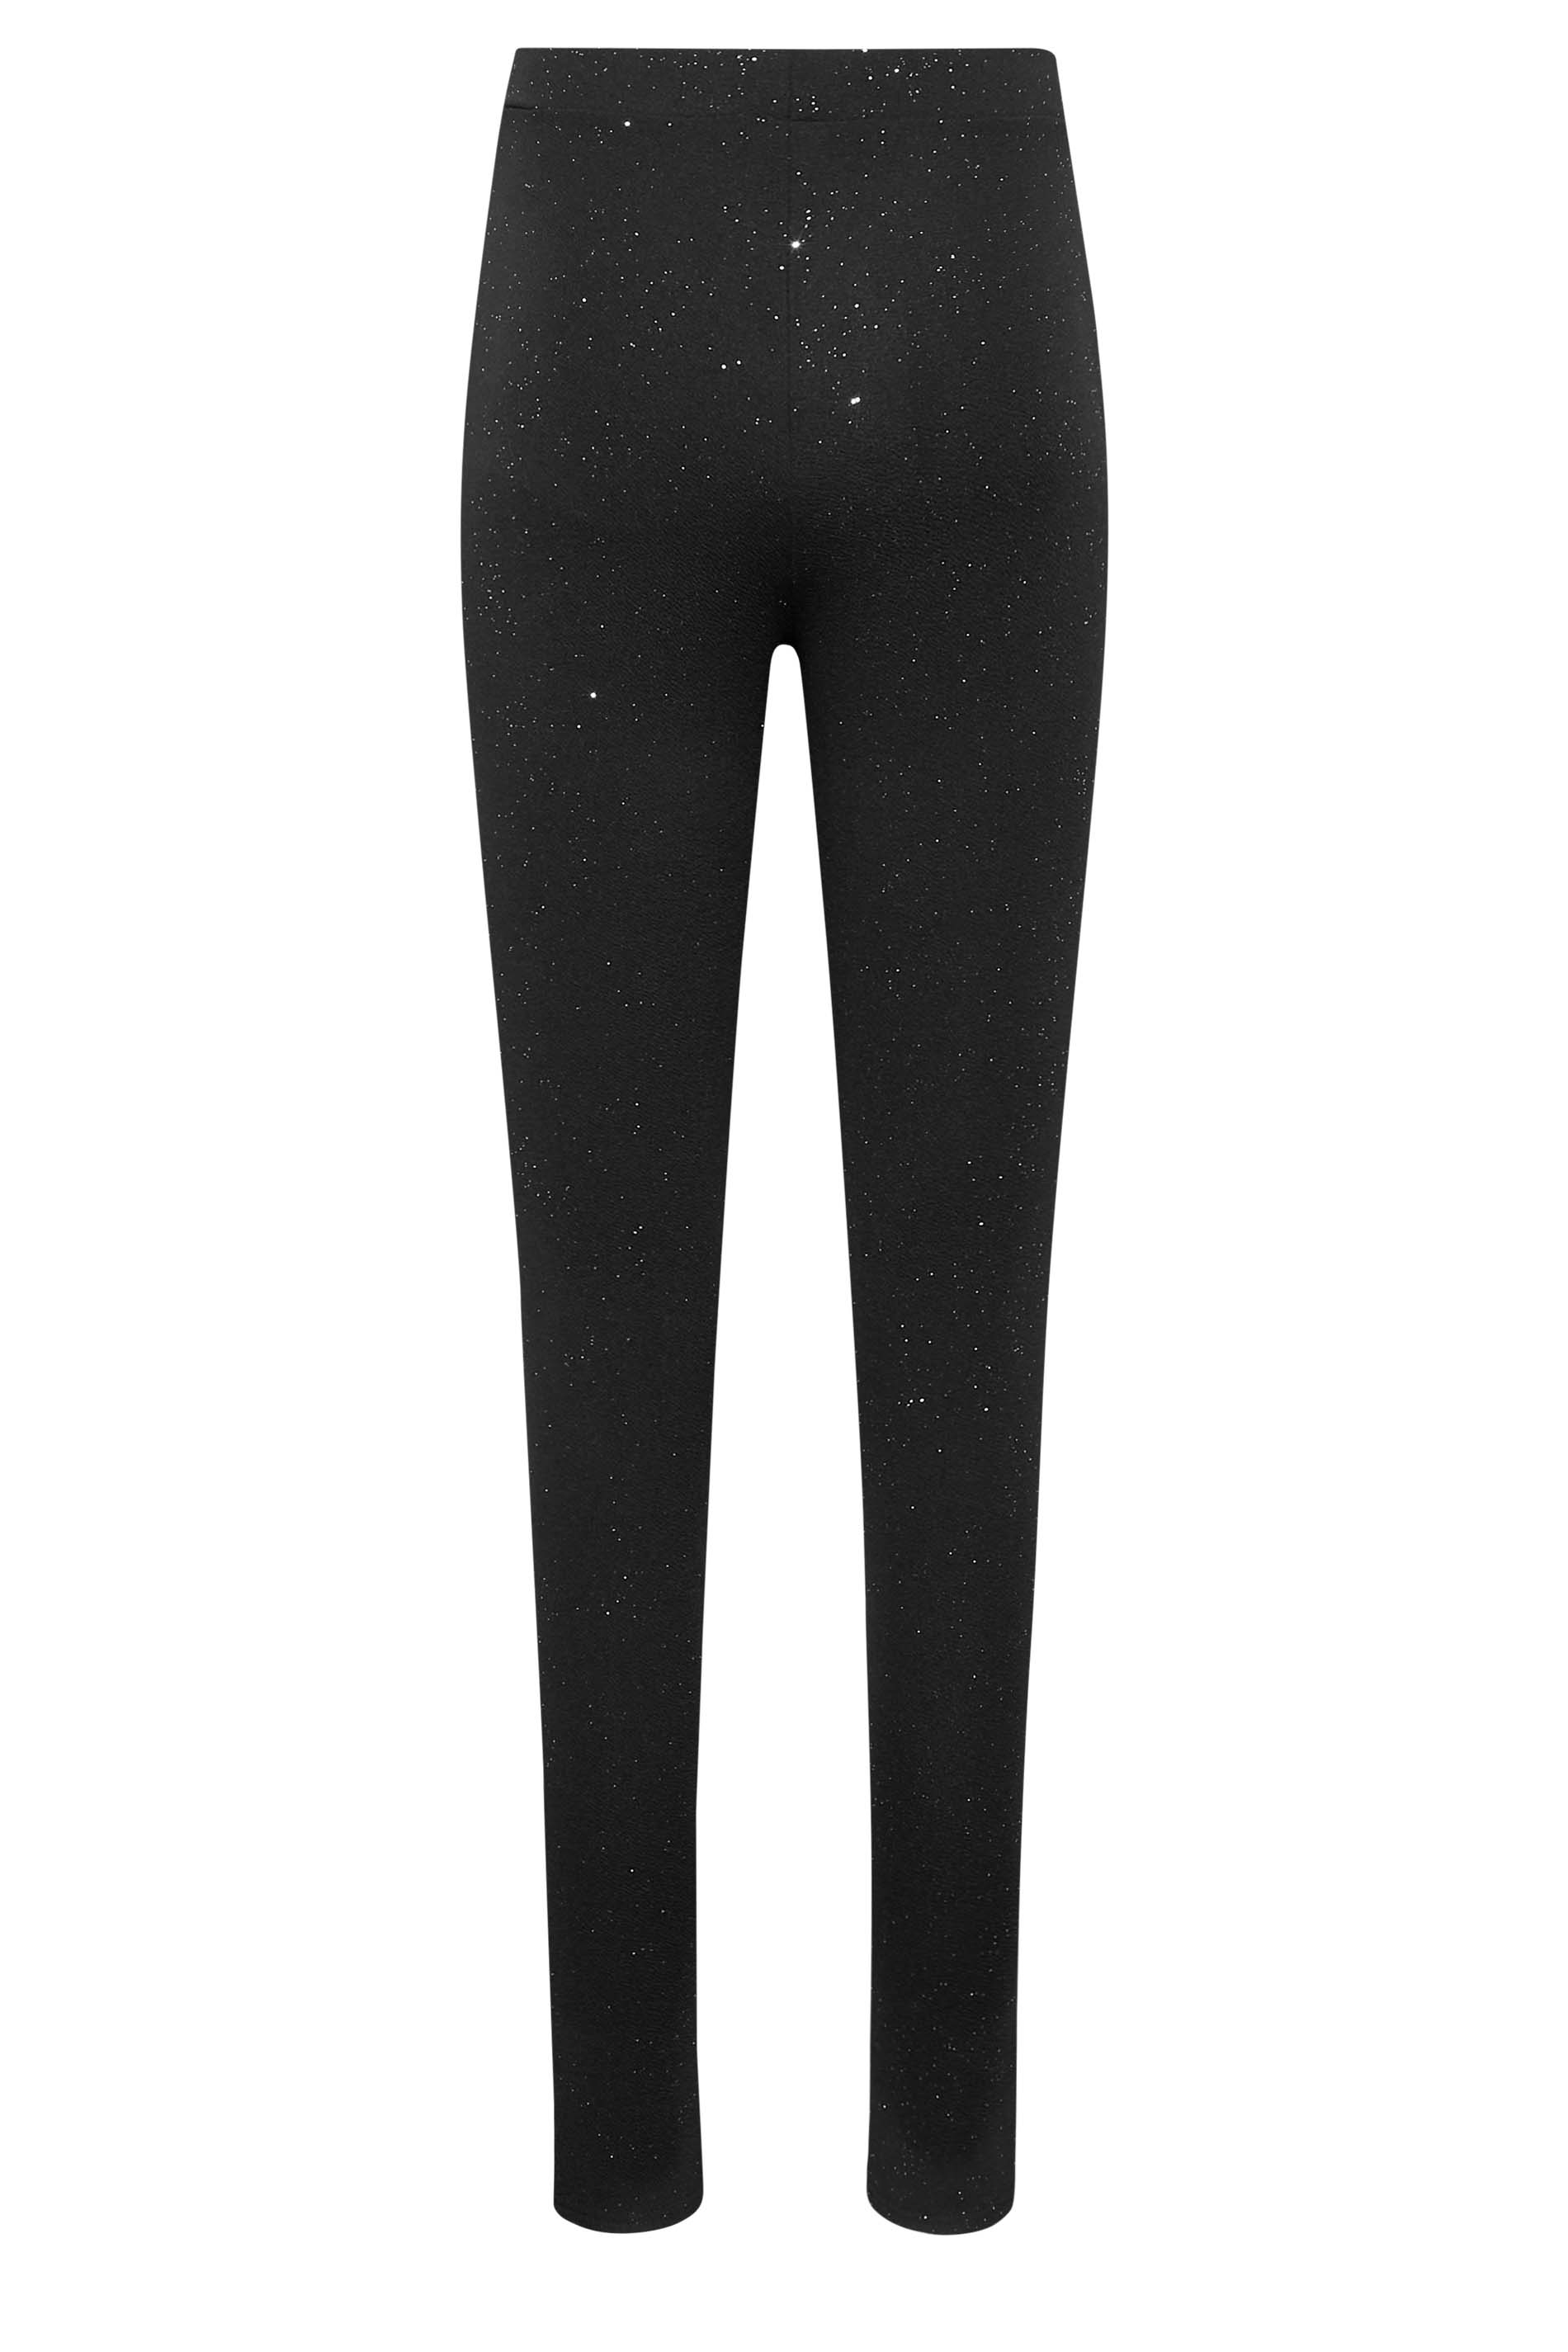 LTS Tall Black Spilt Hem Tapered Trousers | Long Tall Sally  3